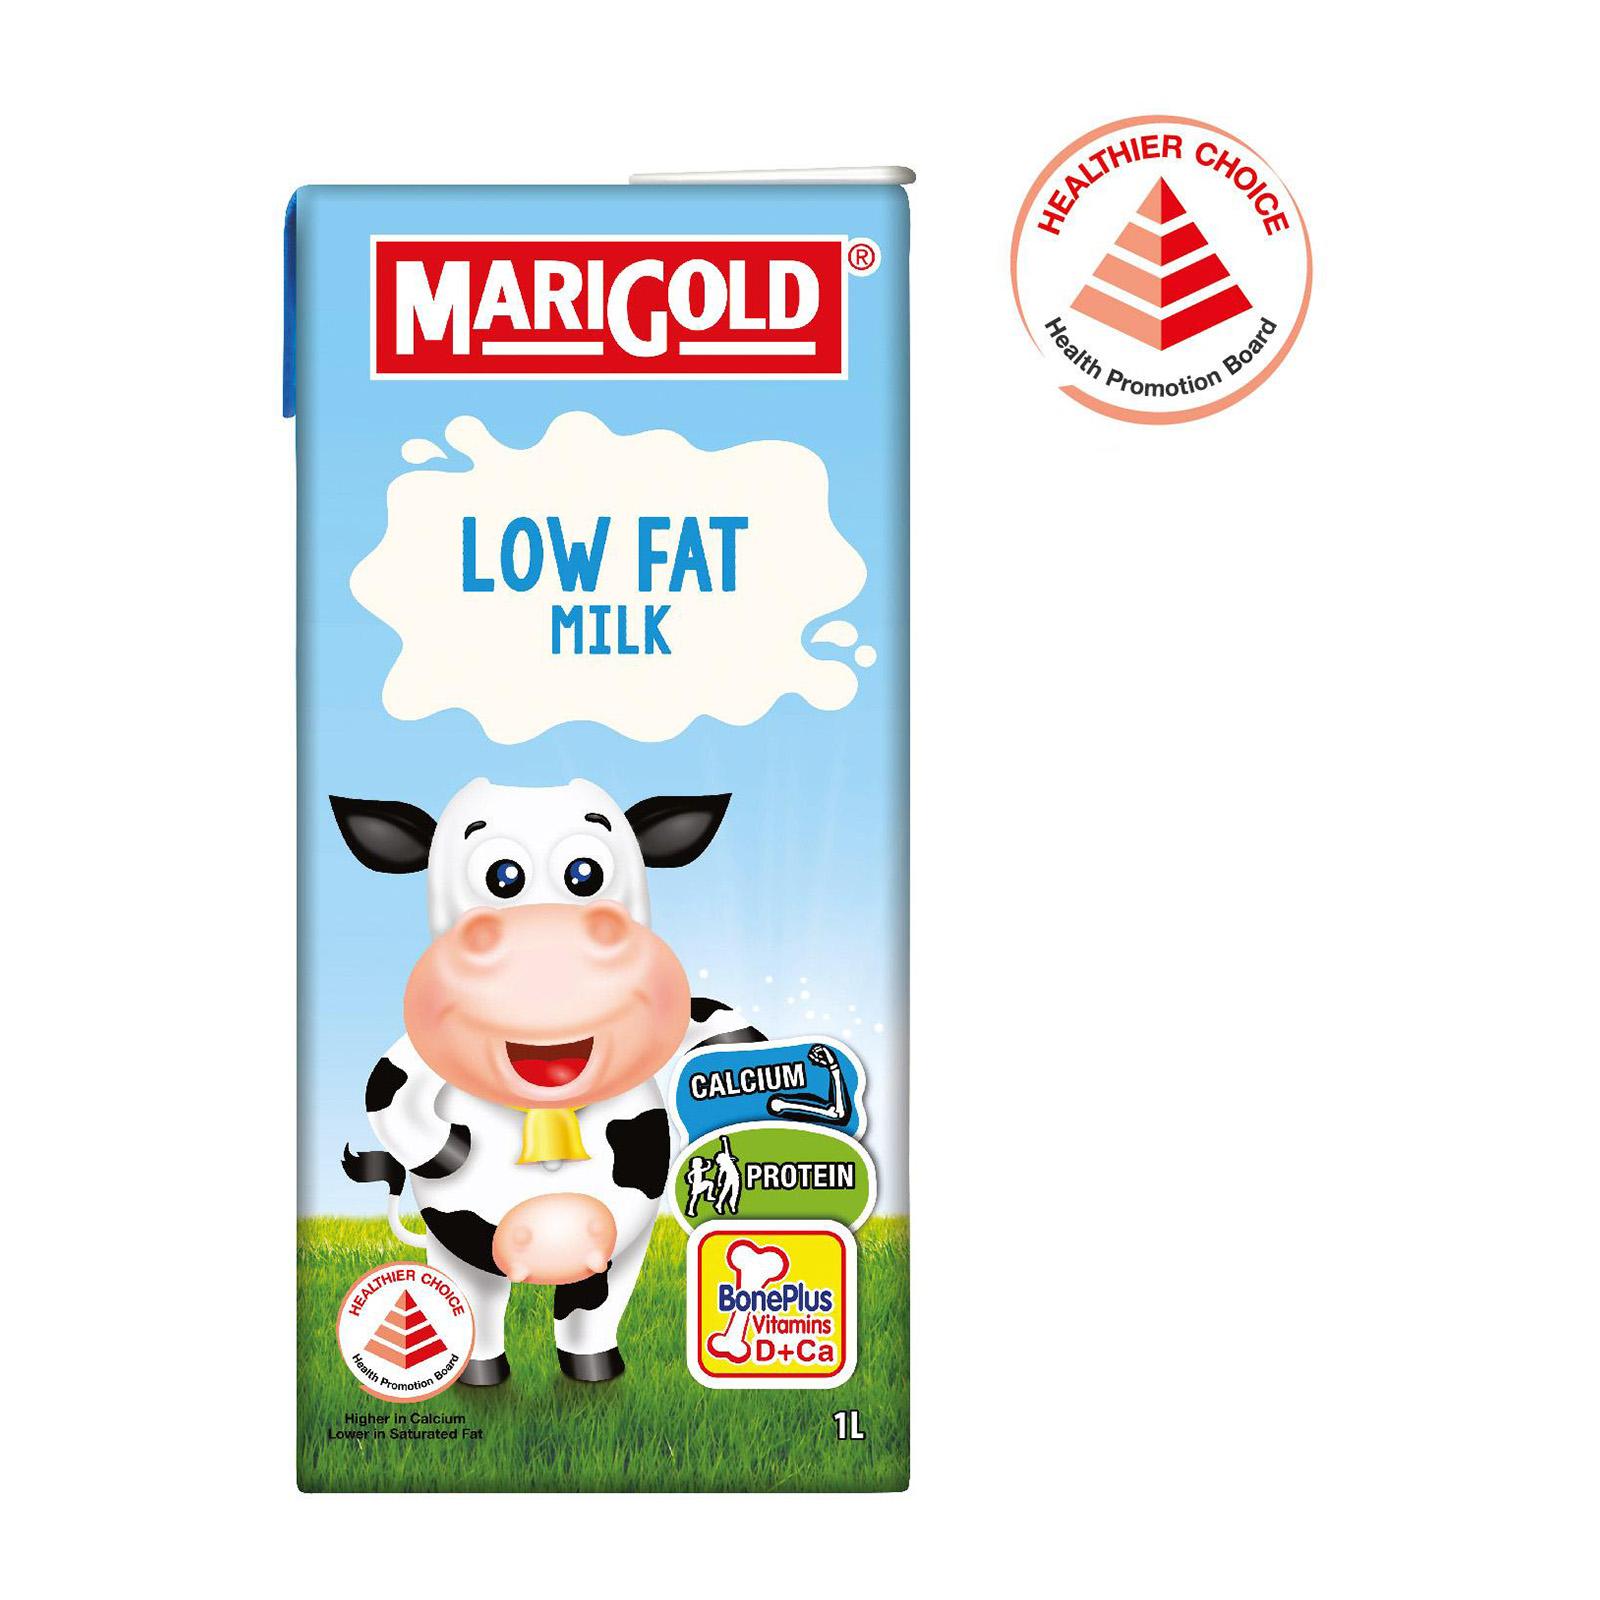 Marigold Low Fat Uht Milk Lazada Singapore